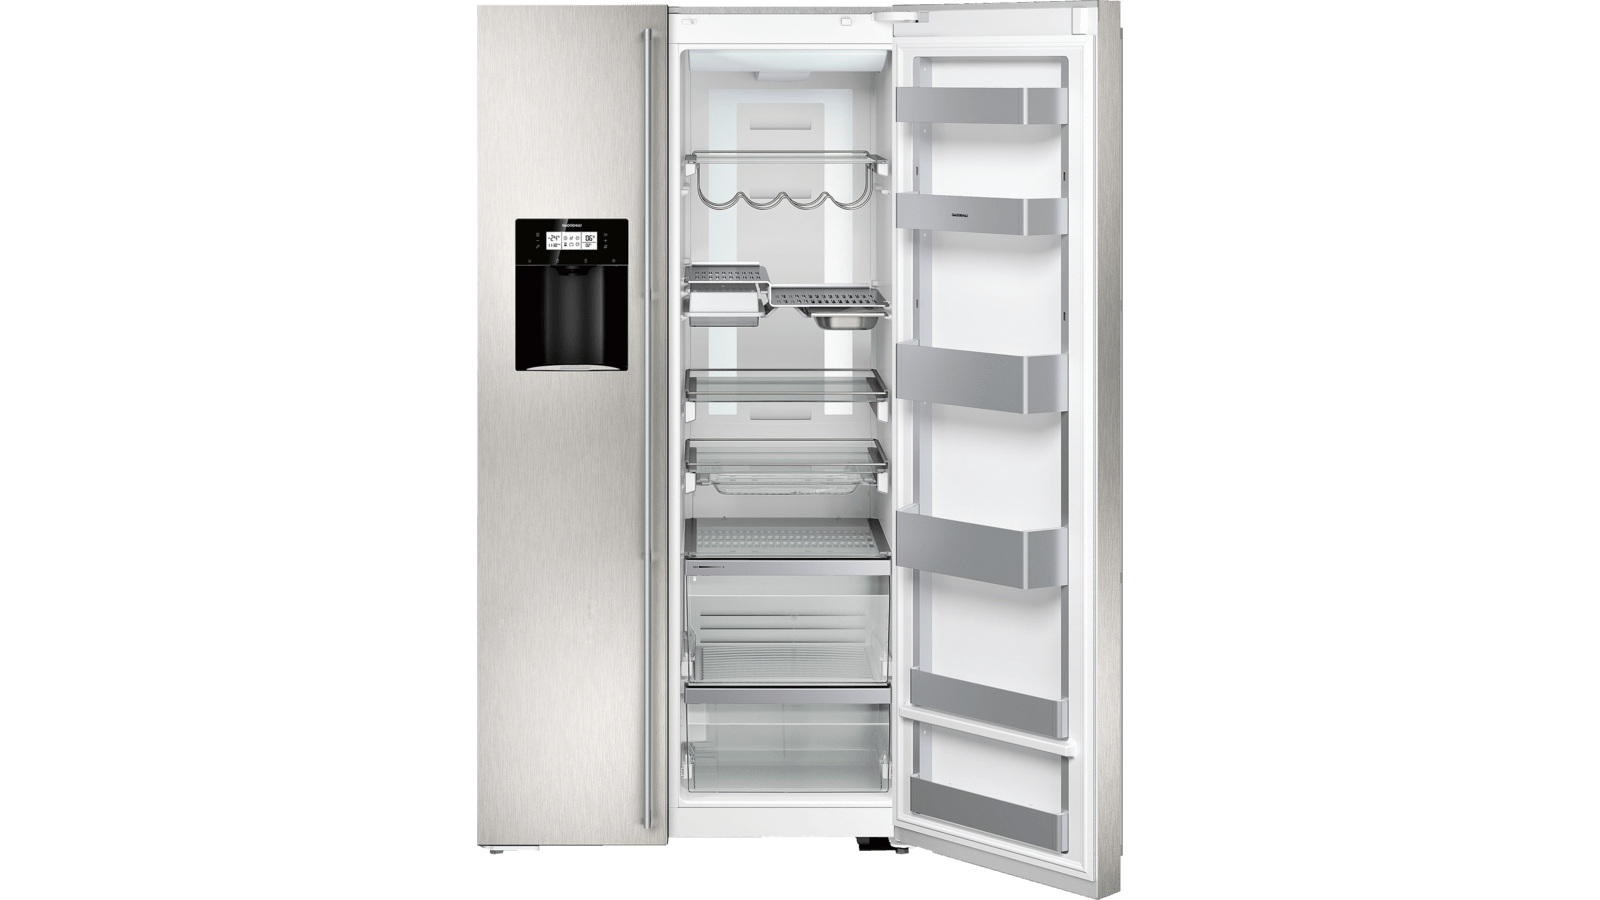 36++ Gaggenau fridge repairs uk ideas in 2021 